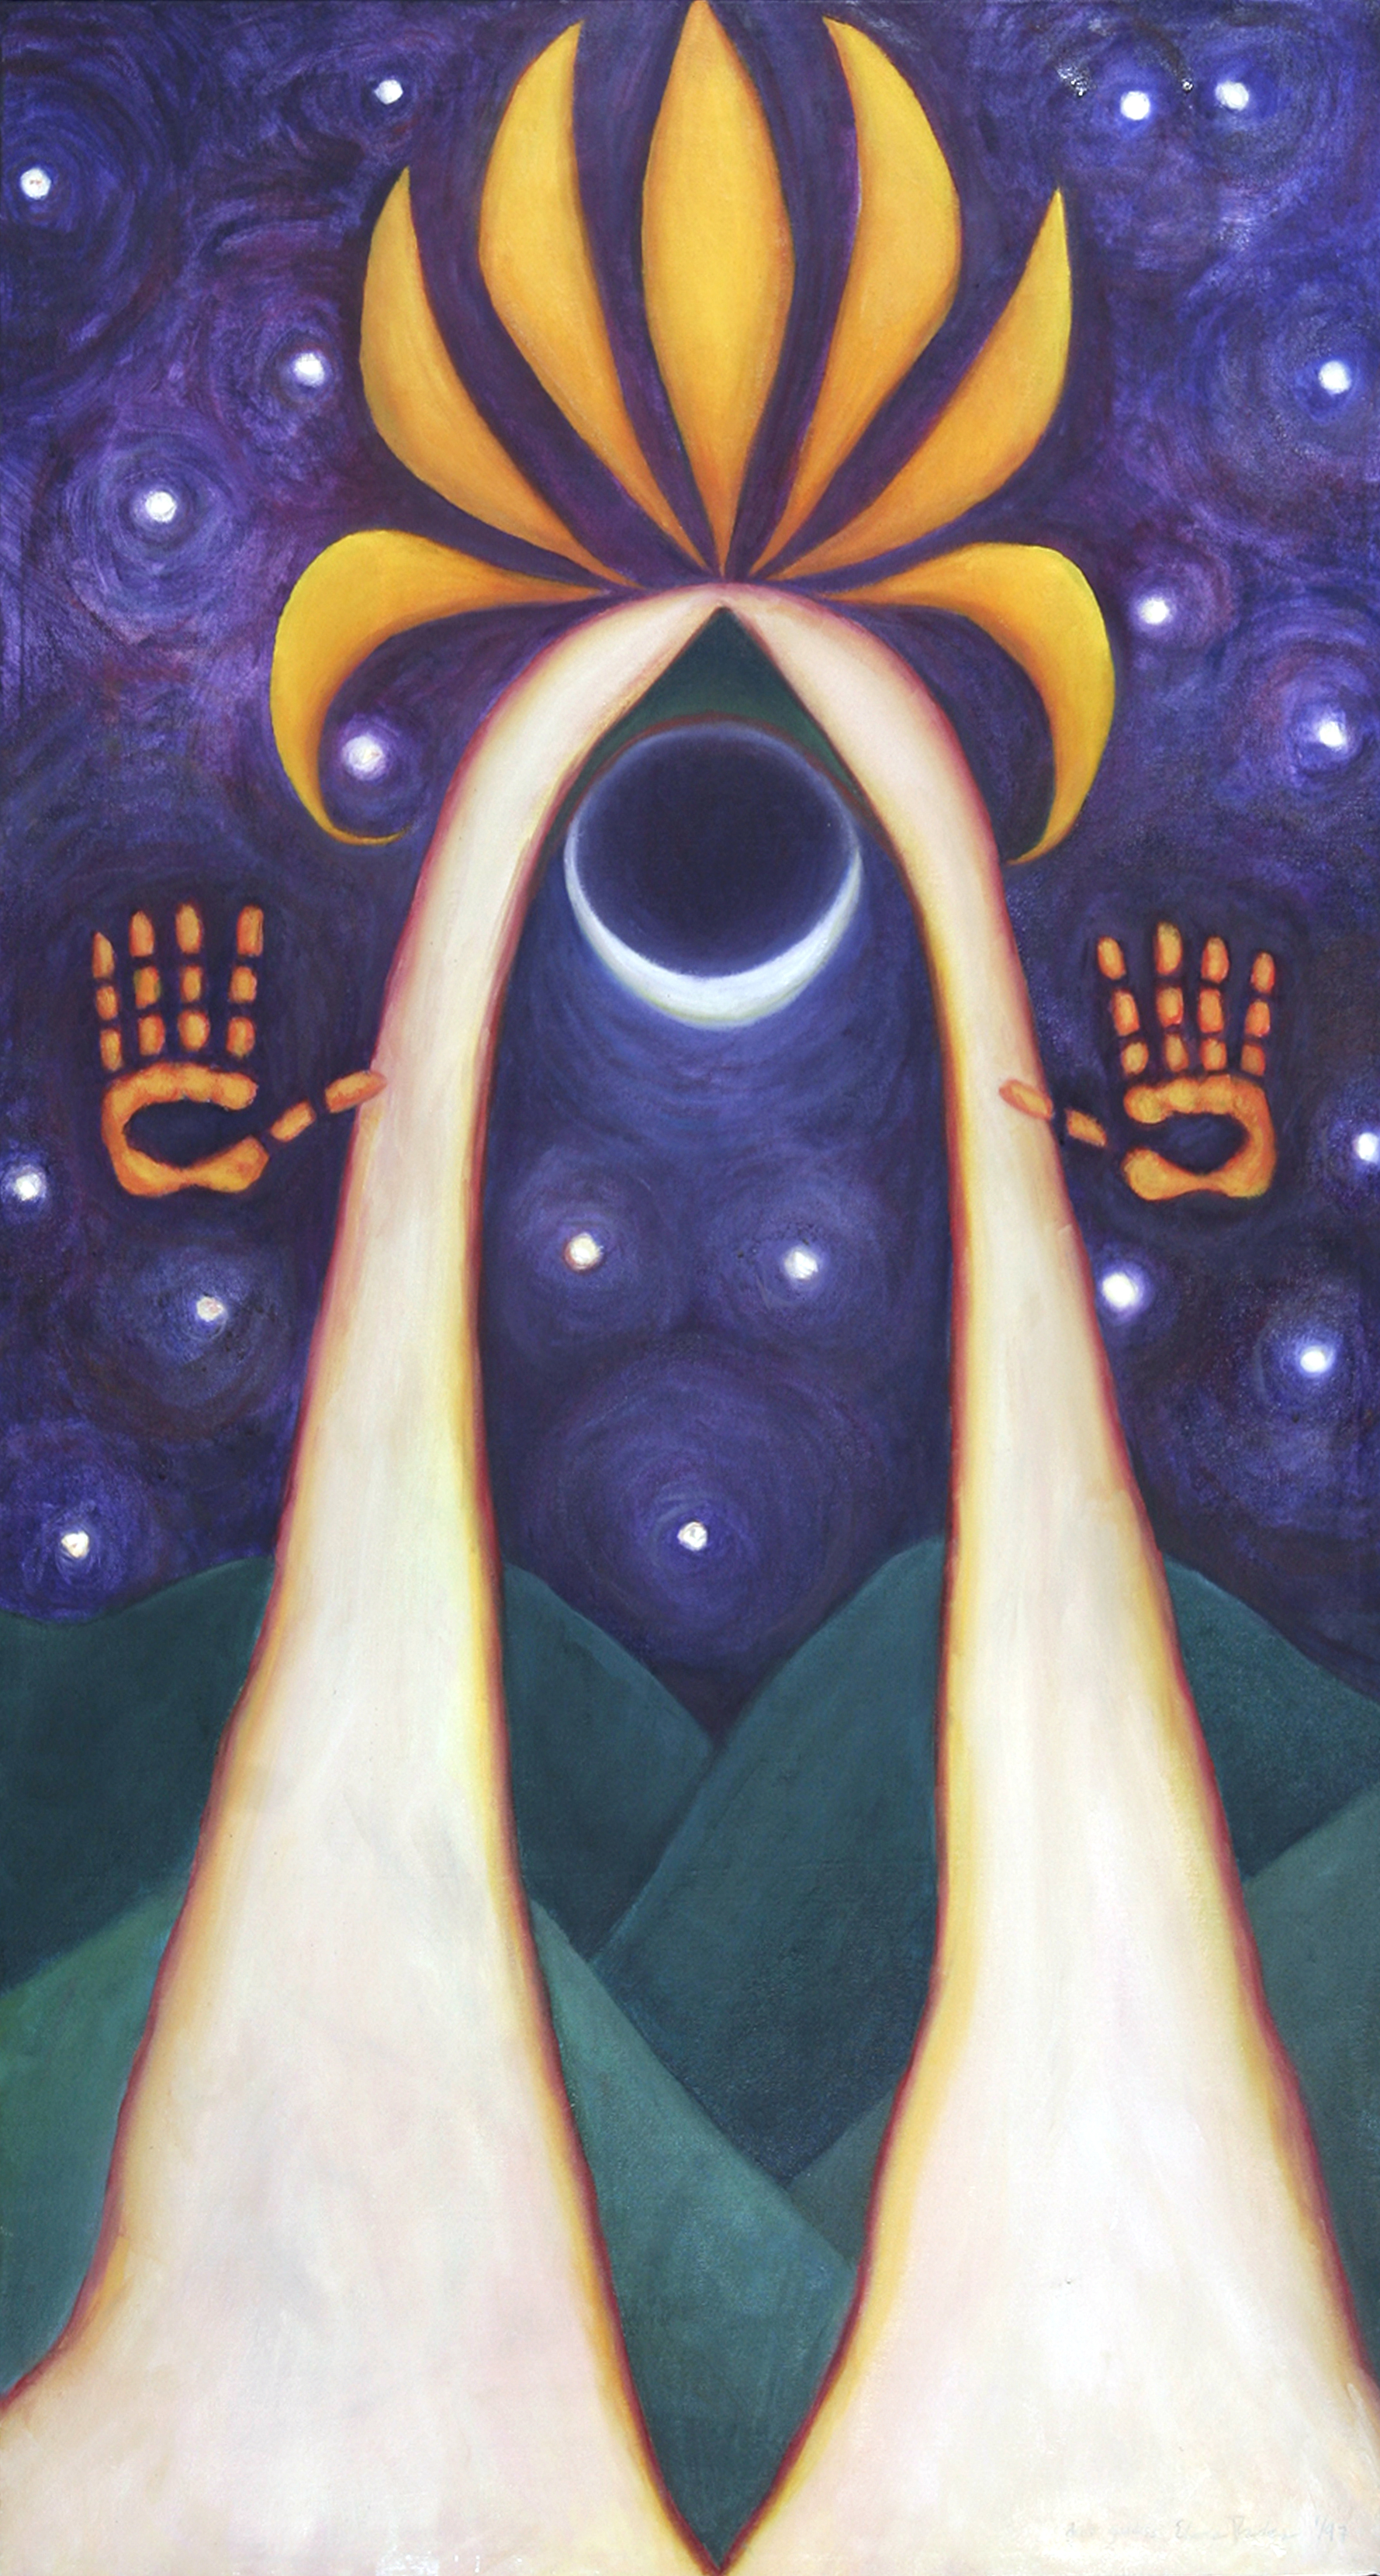 Dark Goddess, 1996, Oil on canvas 46.5”h x 25w”, Private Collection, Eleanor Ruckman
